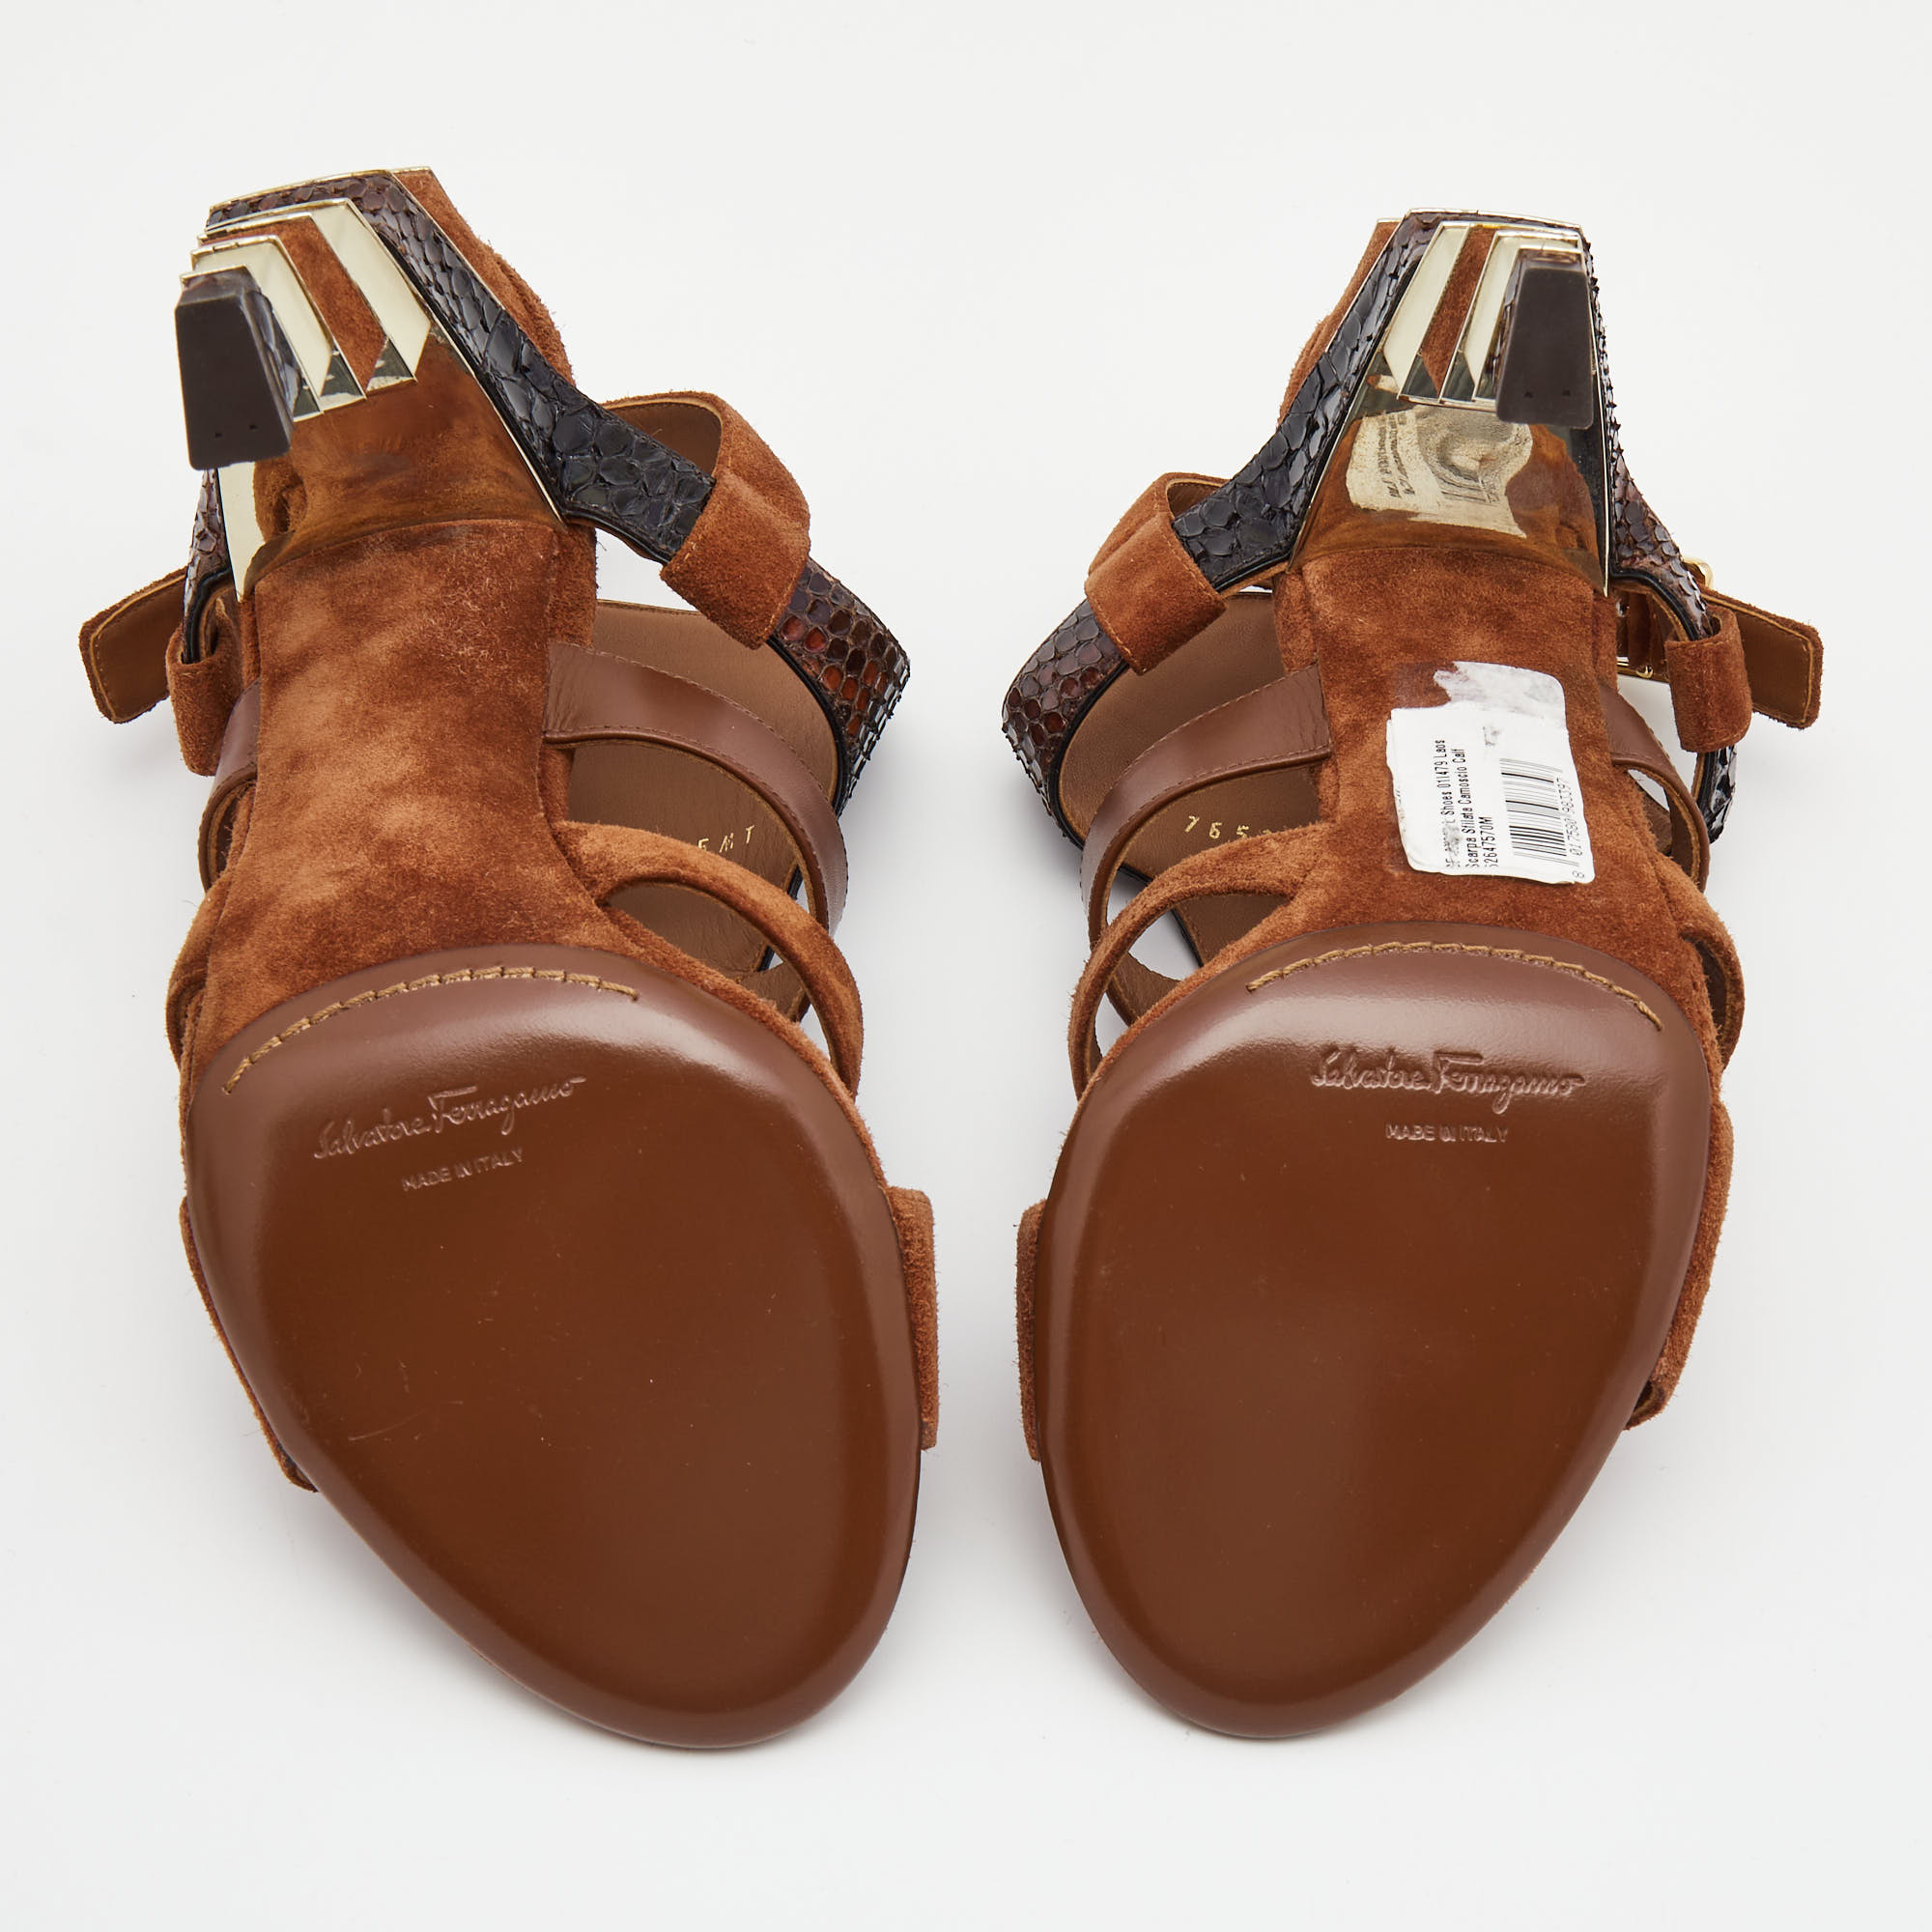 Salvatore Ferragamo Tricolor Suede And Python Leather Laos Strappy Sandals Size 37.5